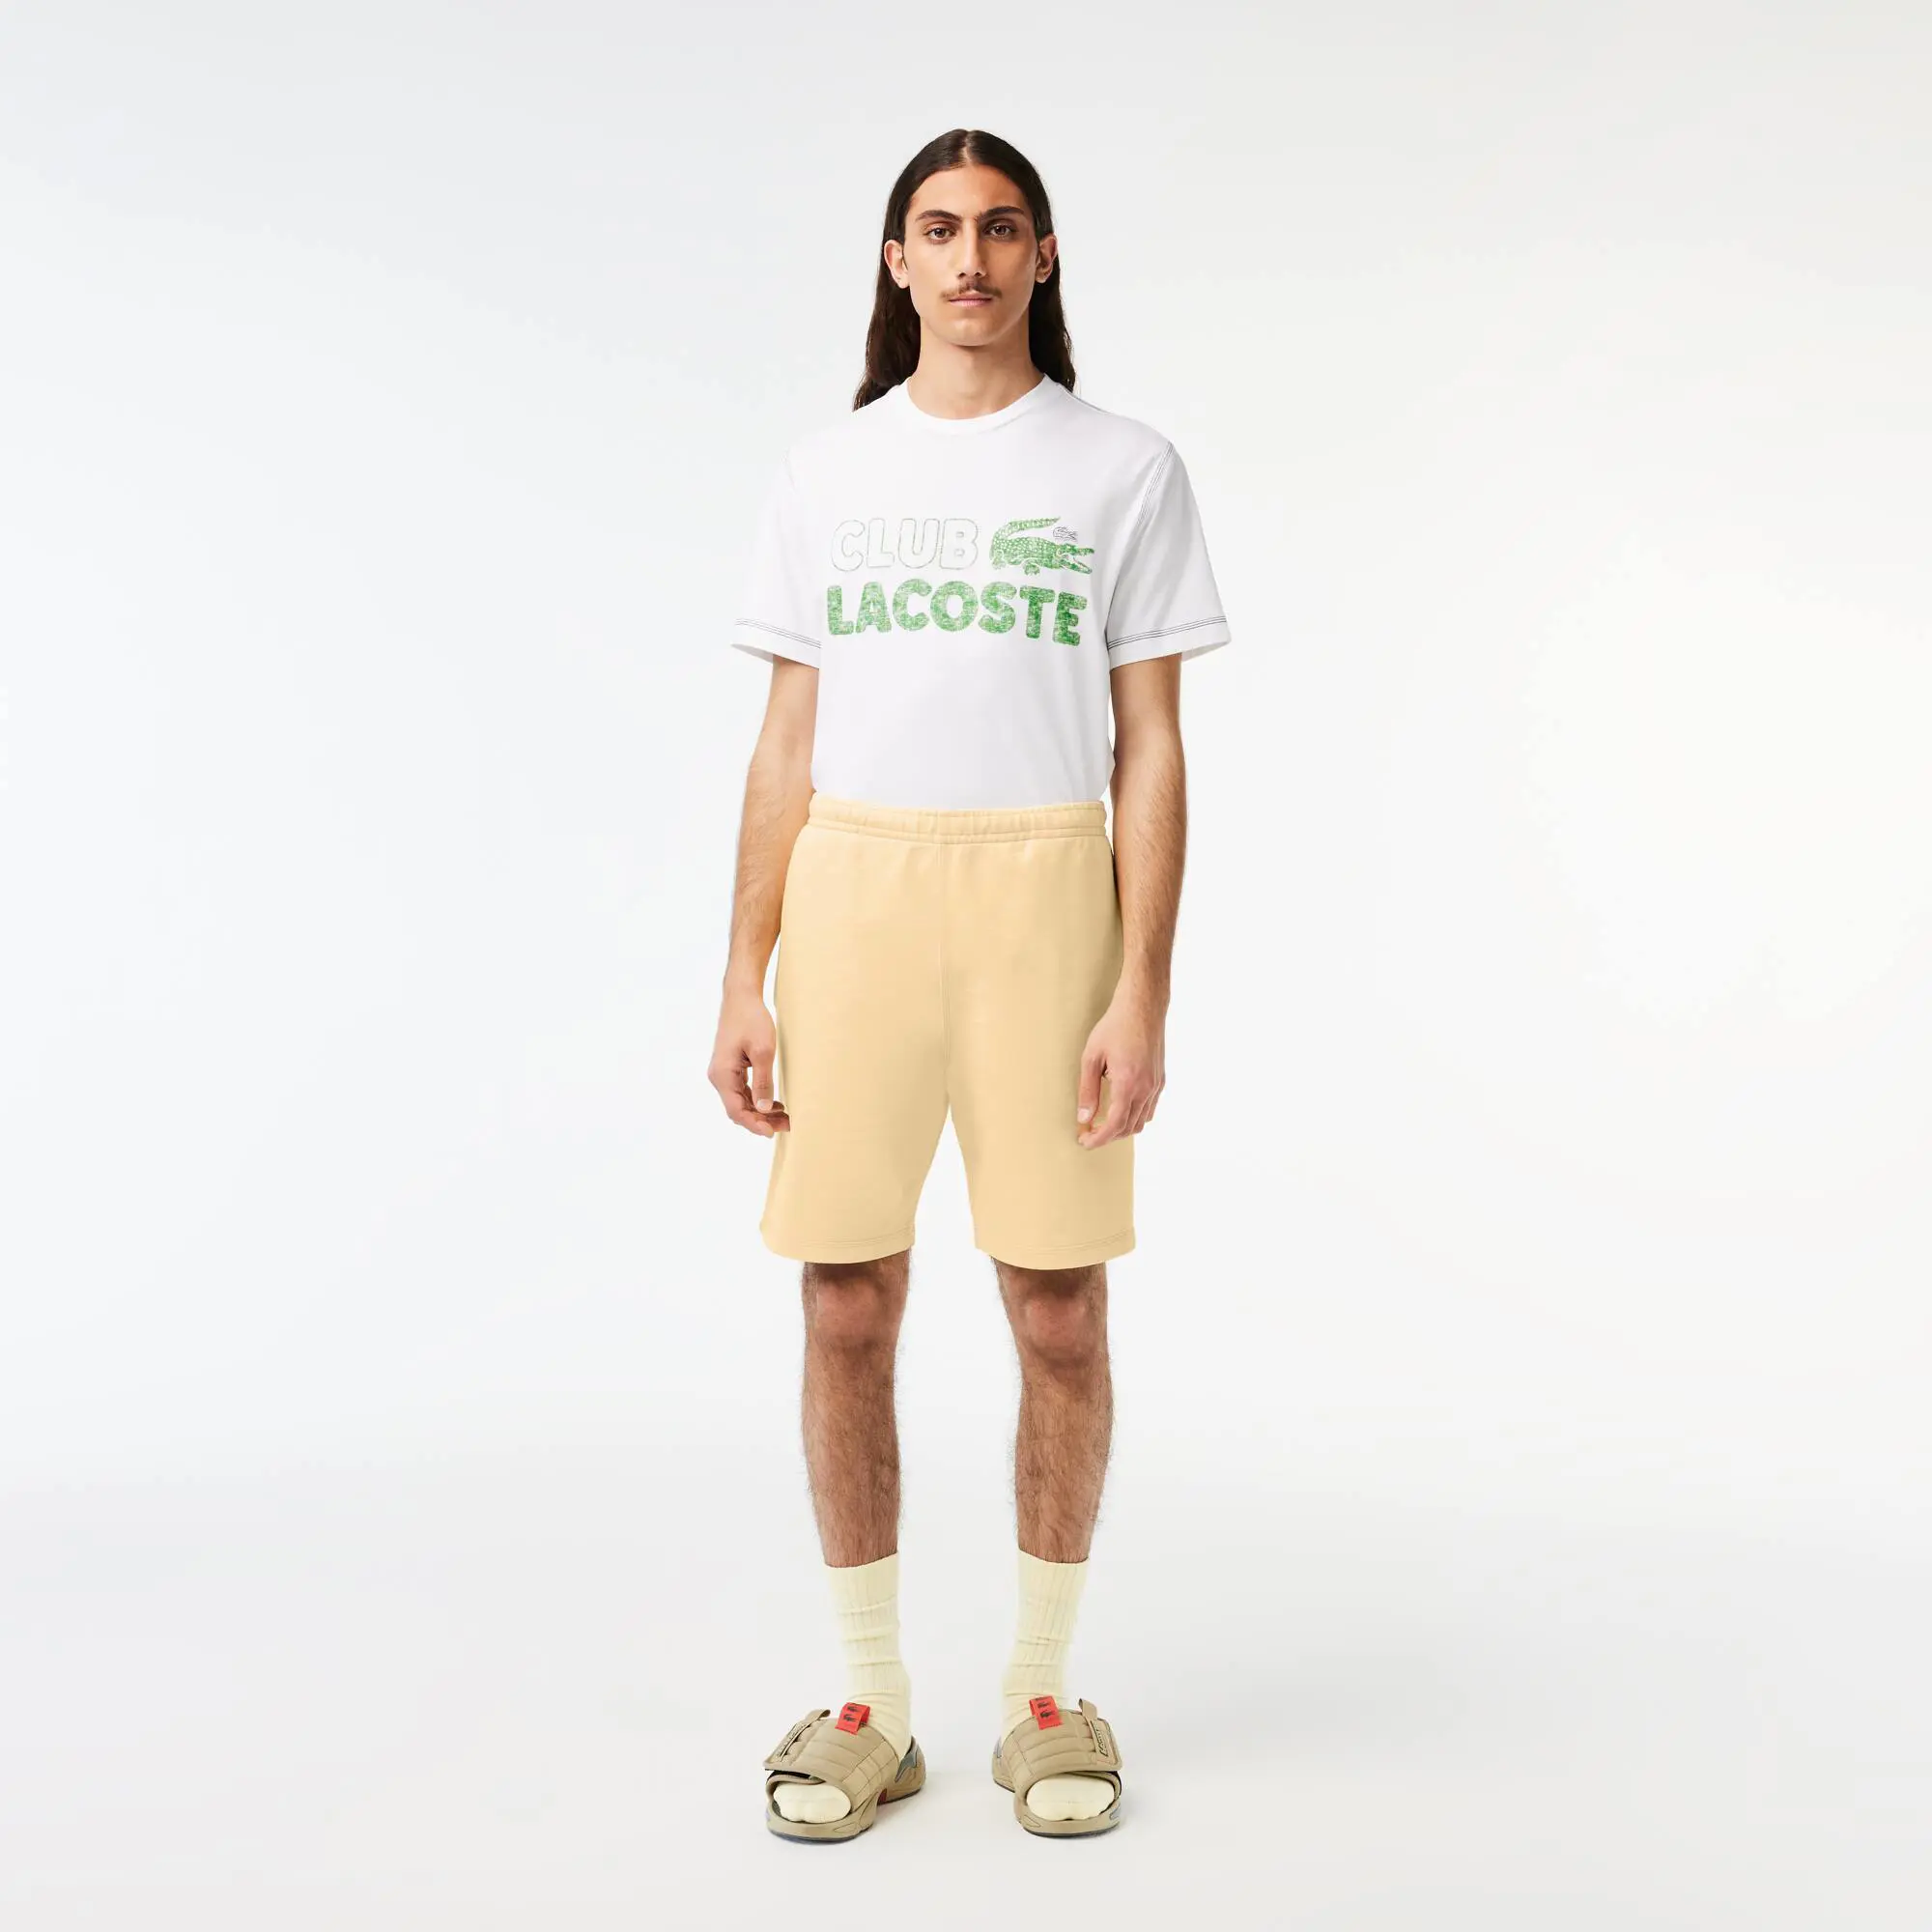 Lacoste Men’s Unbrushed Organic Cotton Fleece Shorts. 1